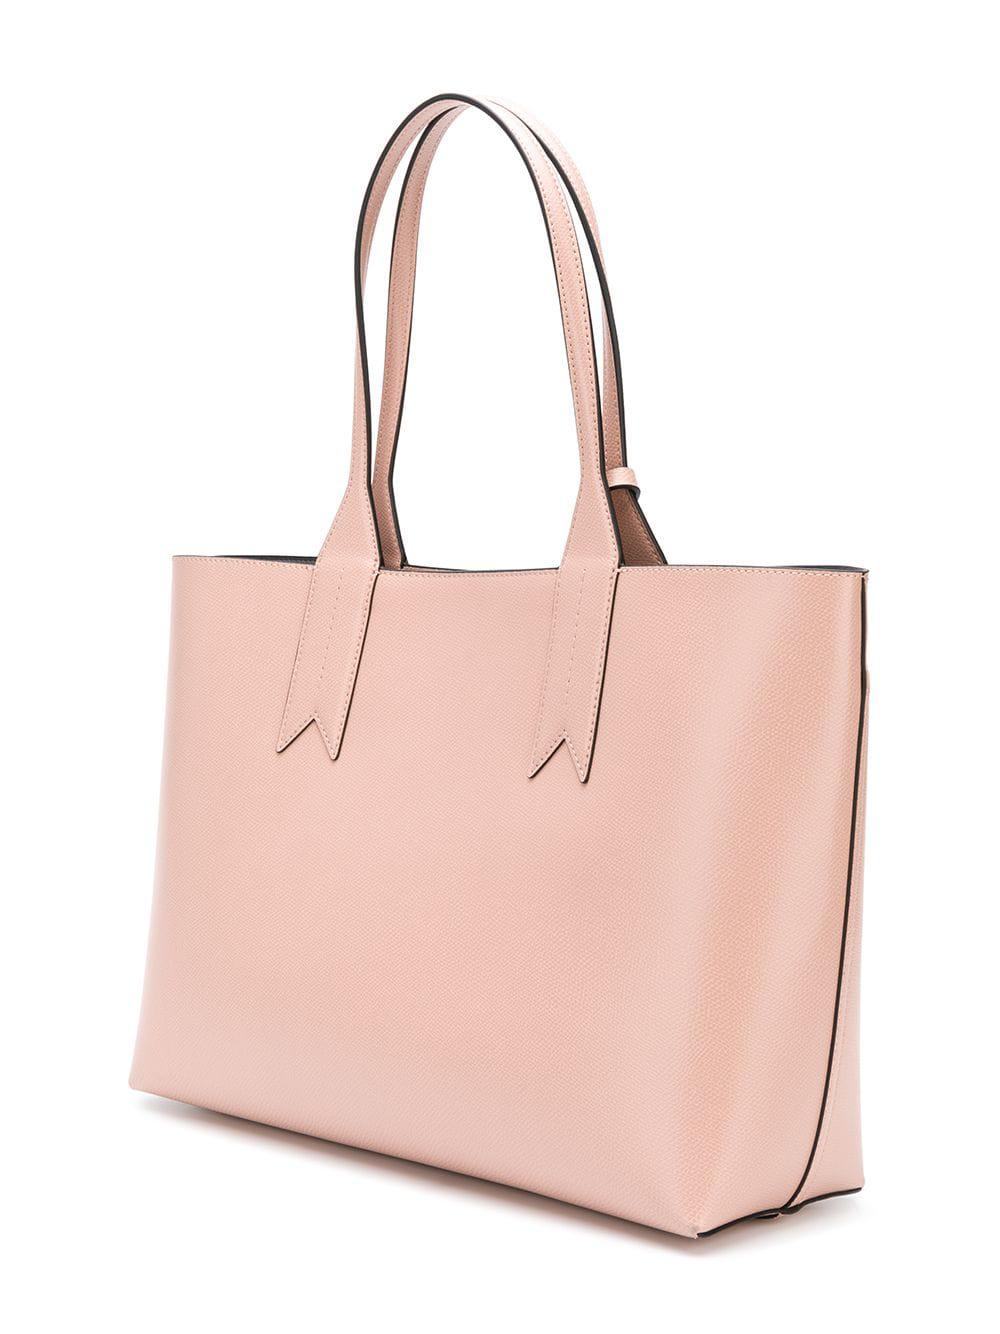 Emporio Armani Rectangular Tote Bag in Pink - Lyst